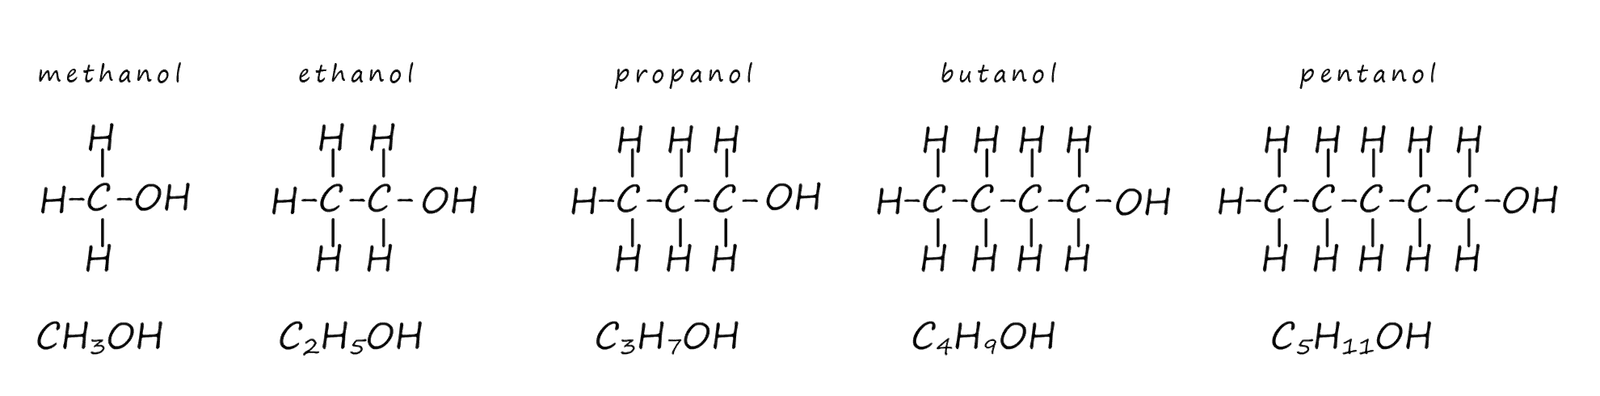 Structural formula, molecular formula and displayed formula for the alcohols methanol, ethanol, propanol, butanol and pentanol.